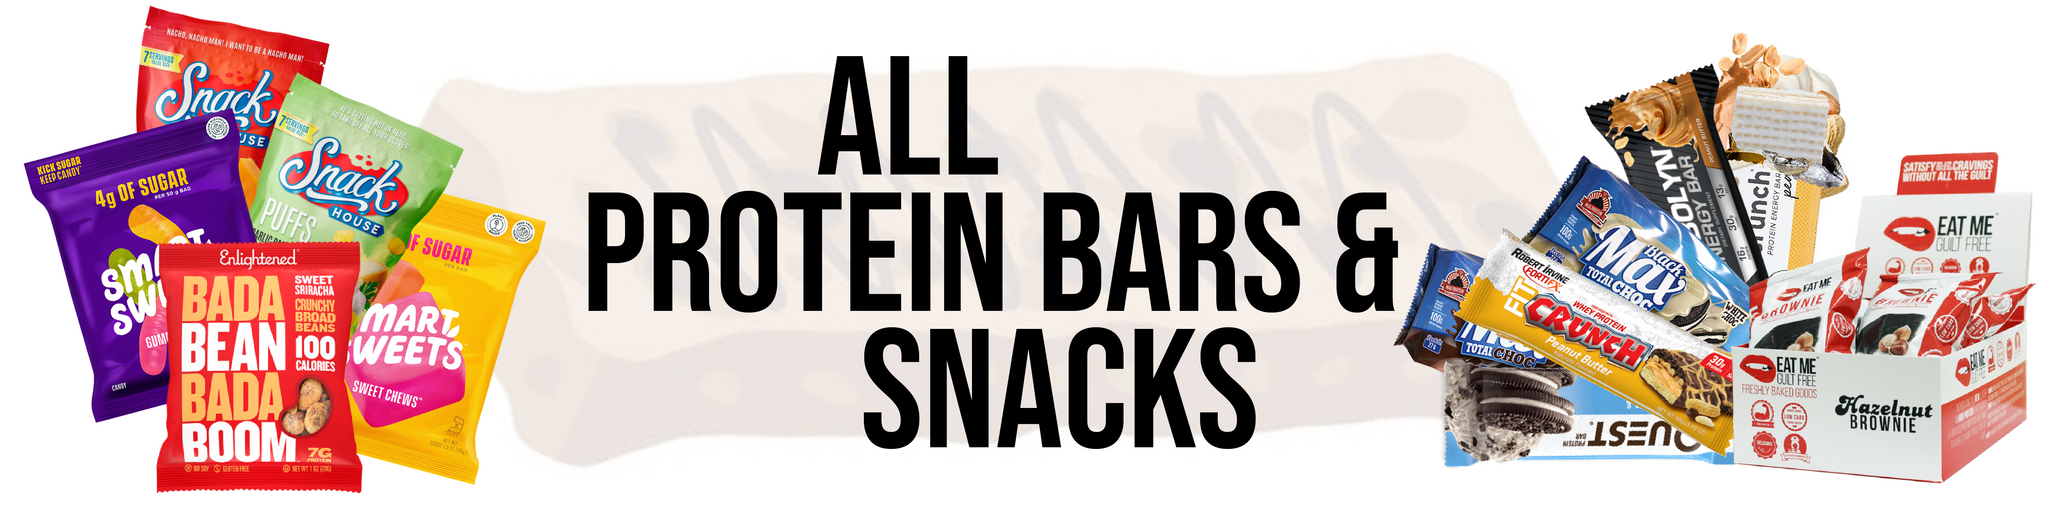 Protein Bars & Snacks